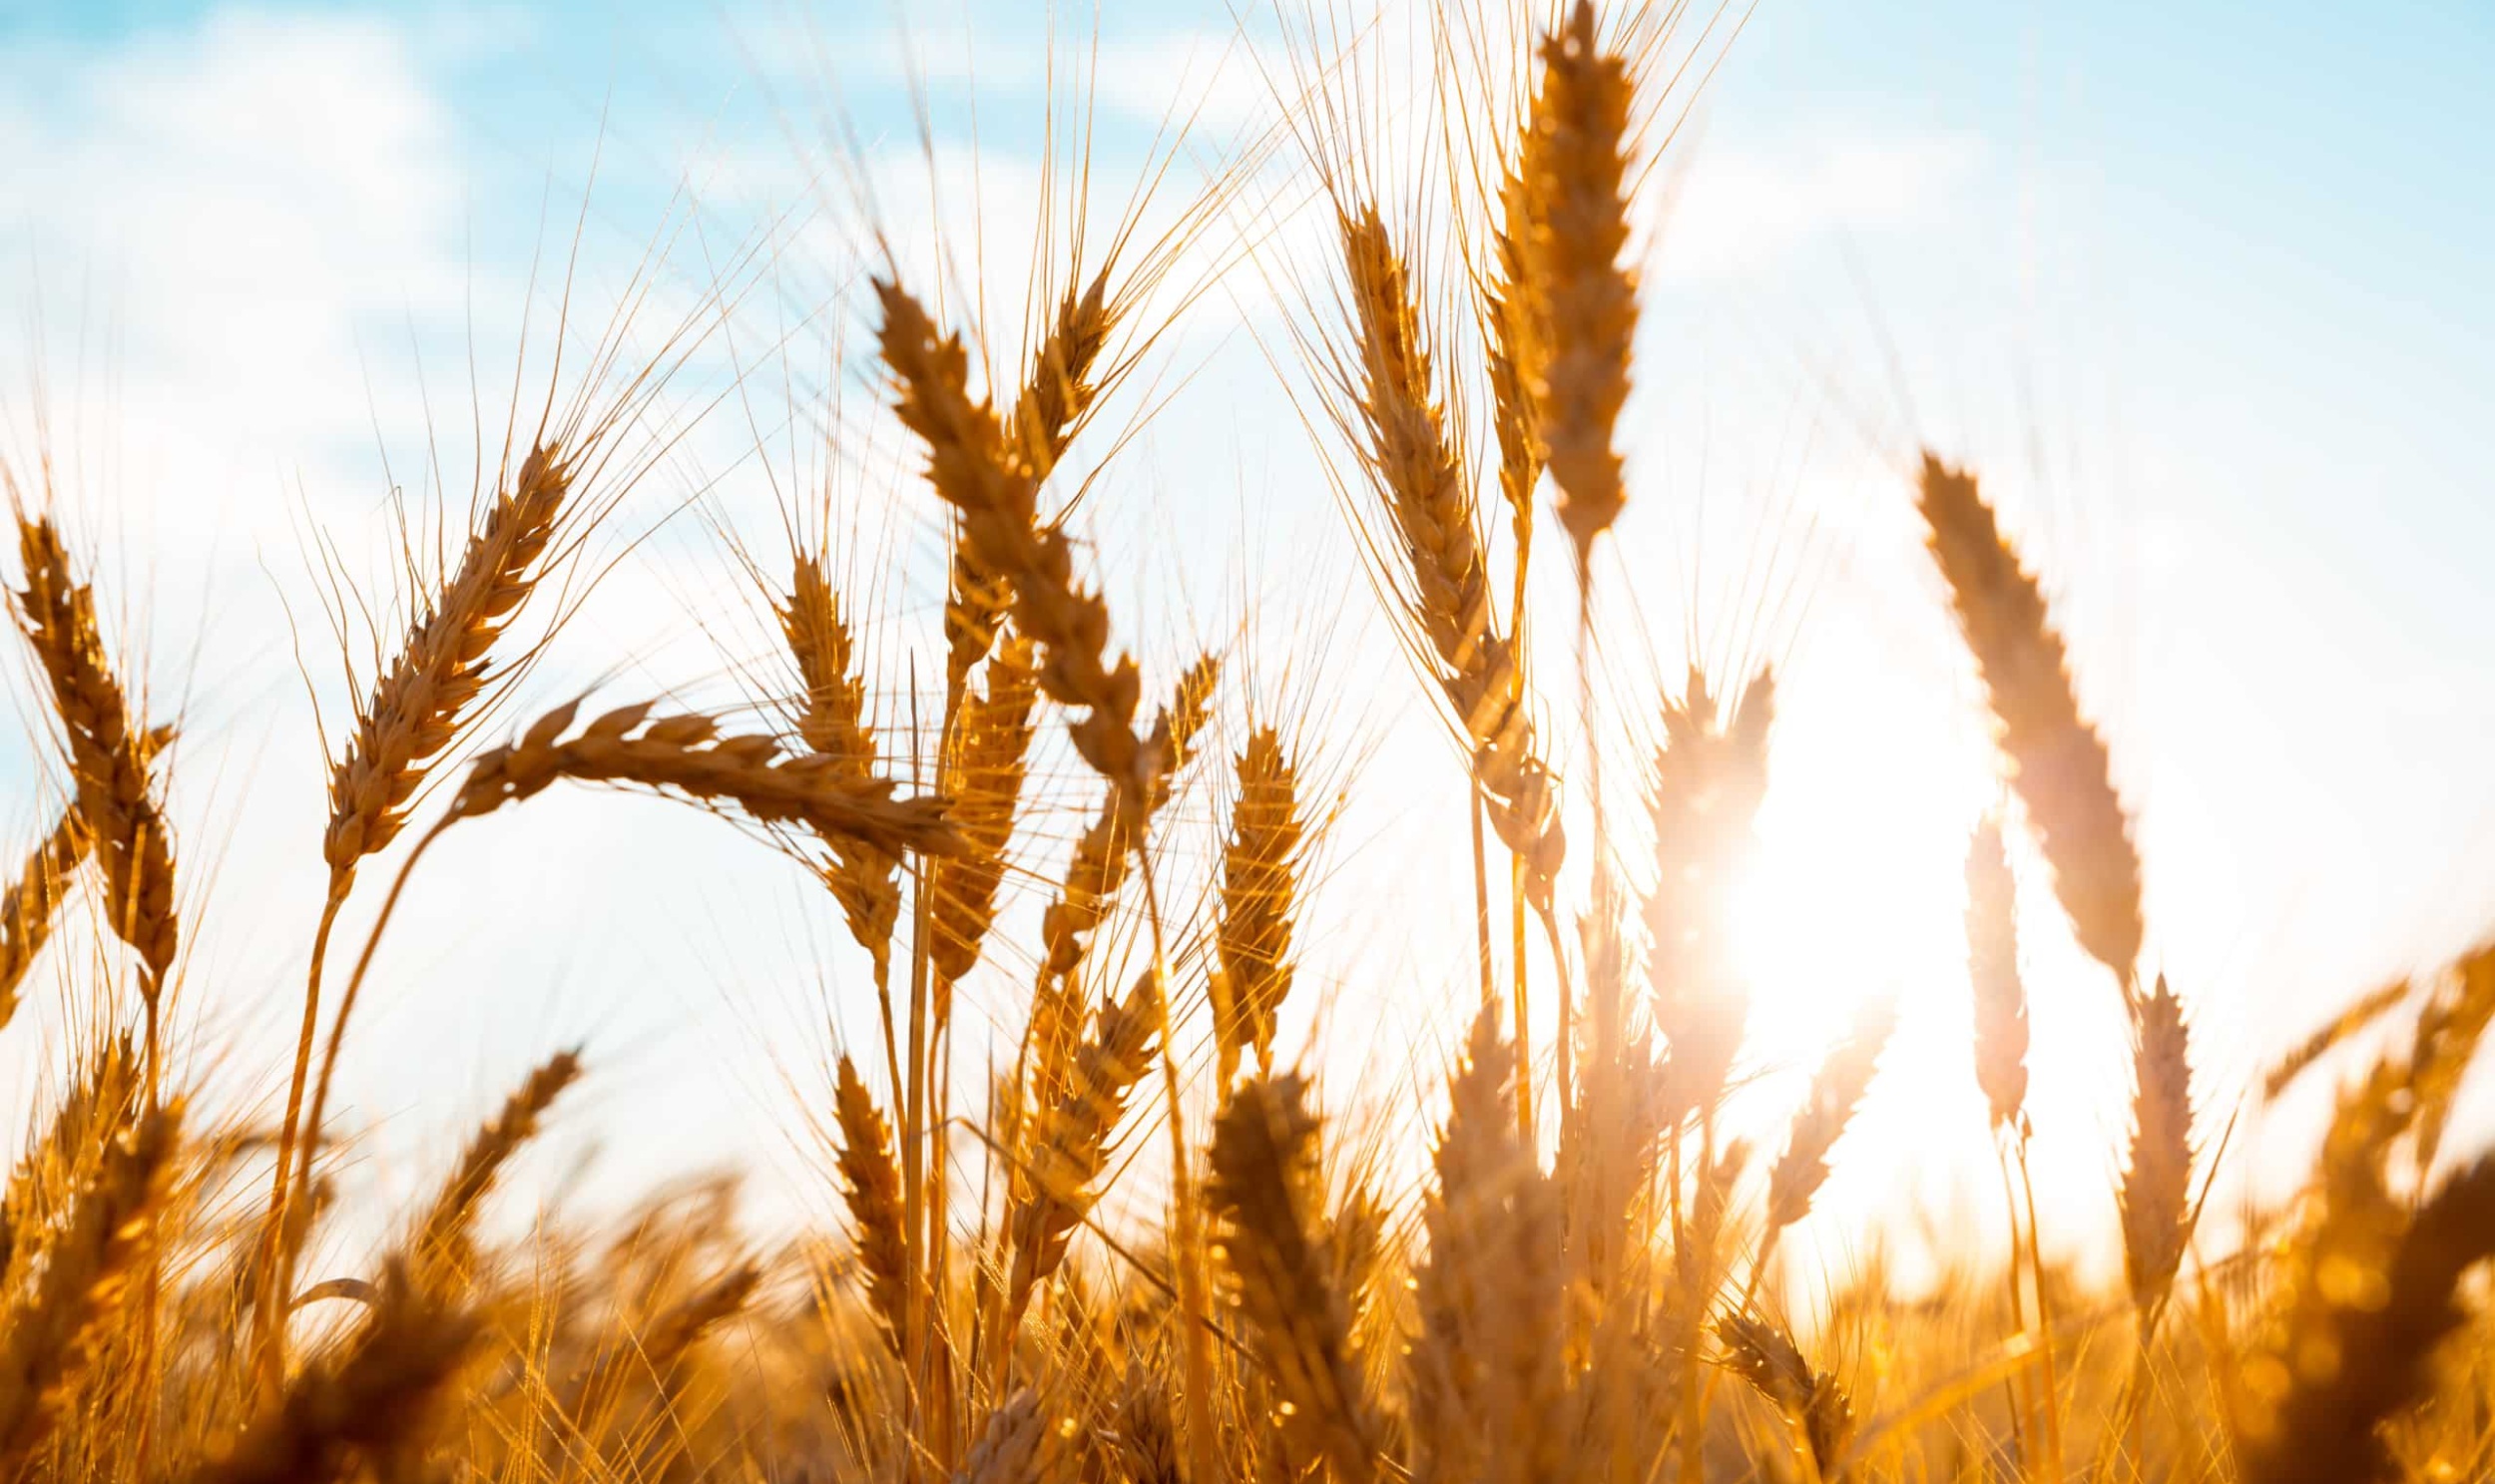 Wheat field in the sun